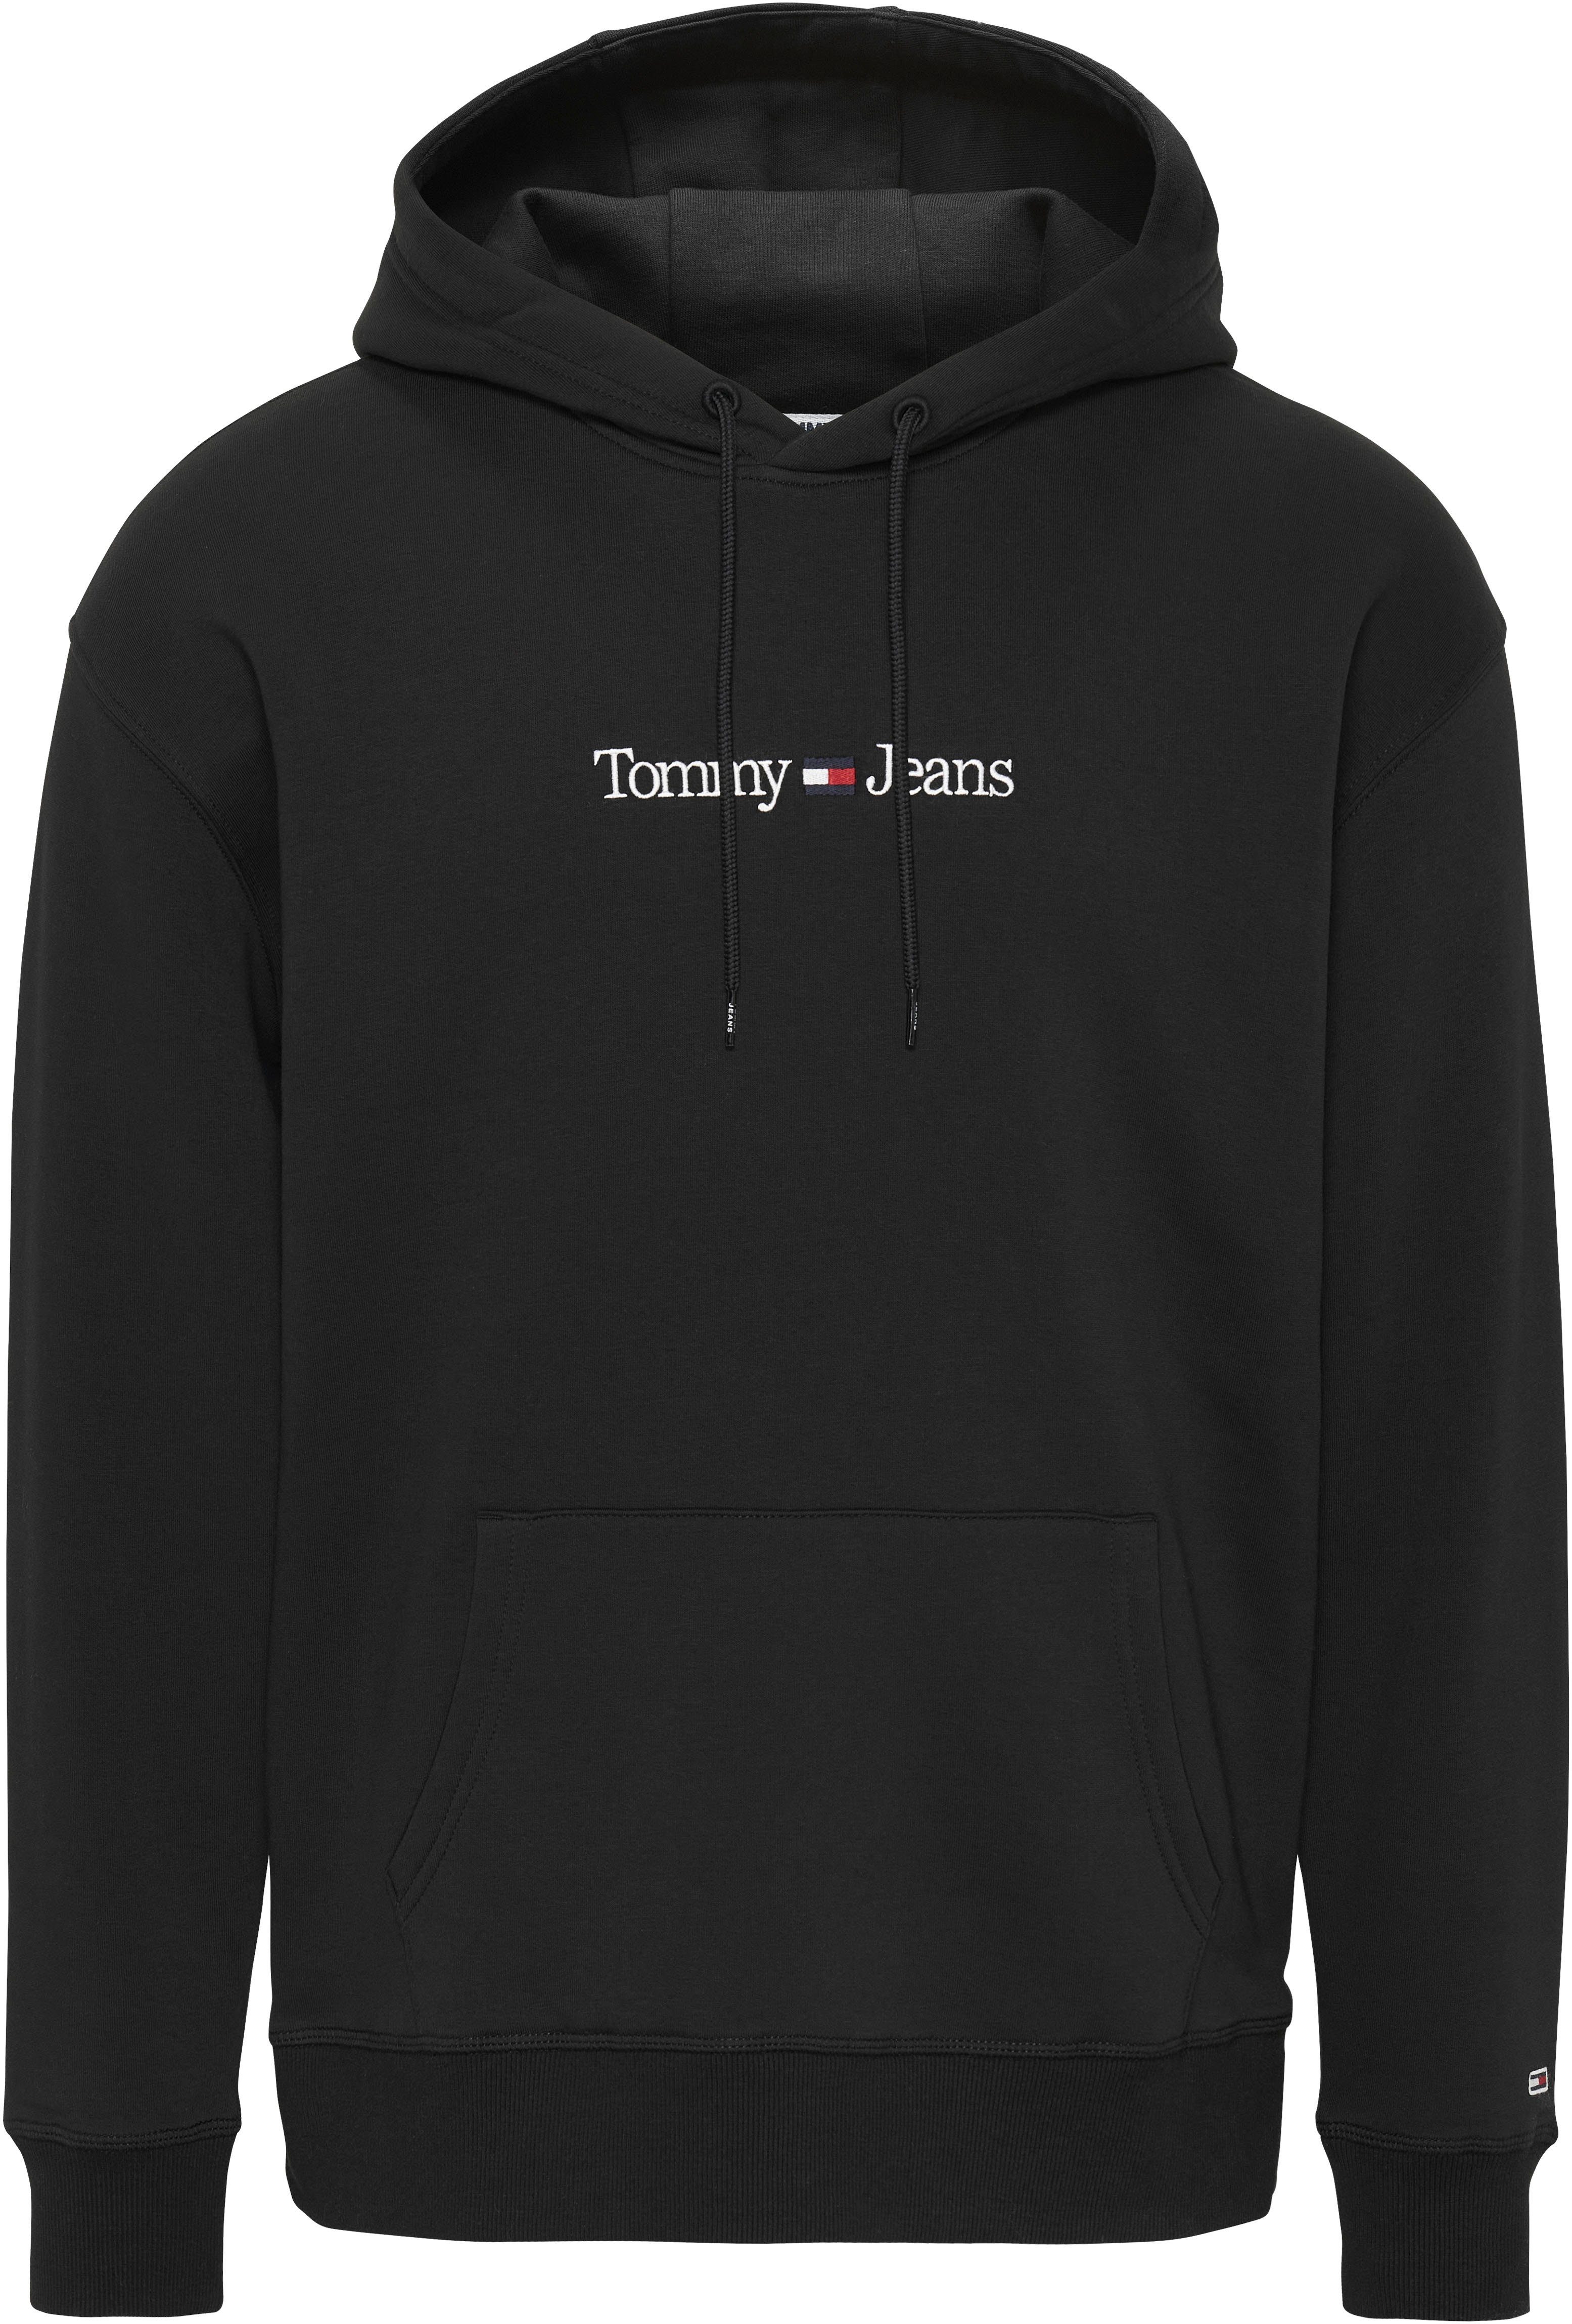 REG Tommy TJM auf Jeans LINEAR mit Kapuzensweatshirt der Tommy-Jeans Branding HOODIE Brust